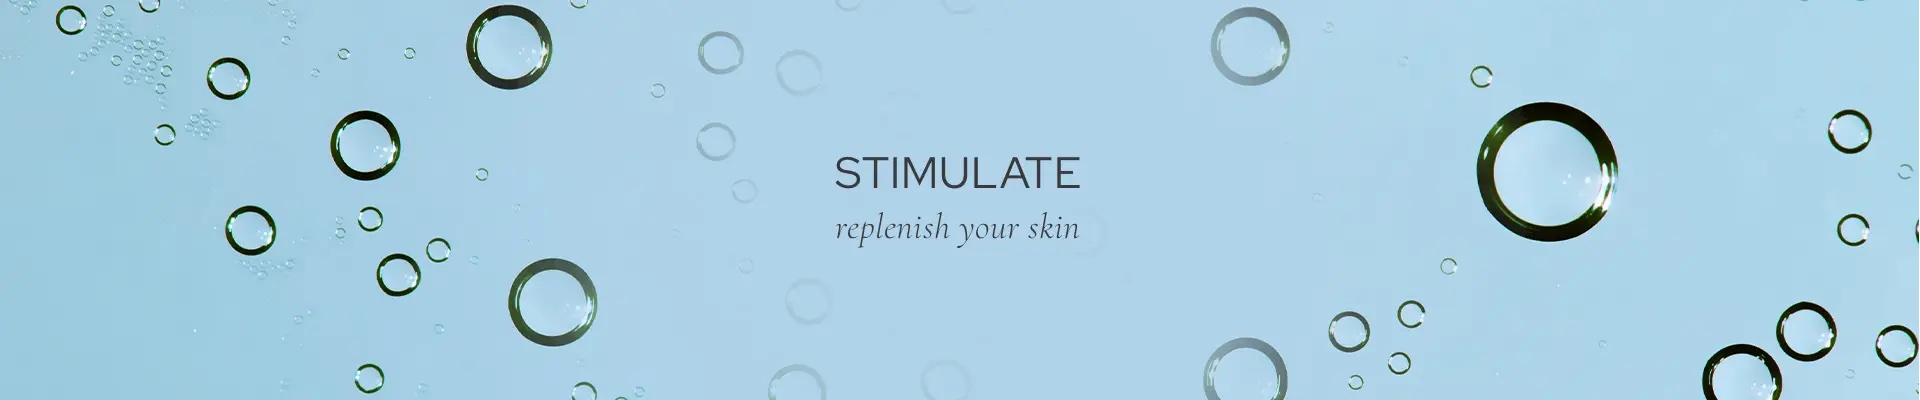 Stimulate - replenish your skin